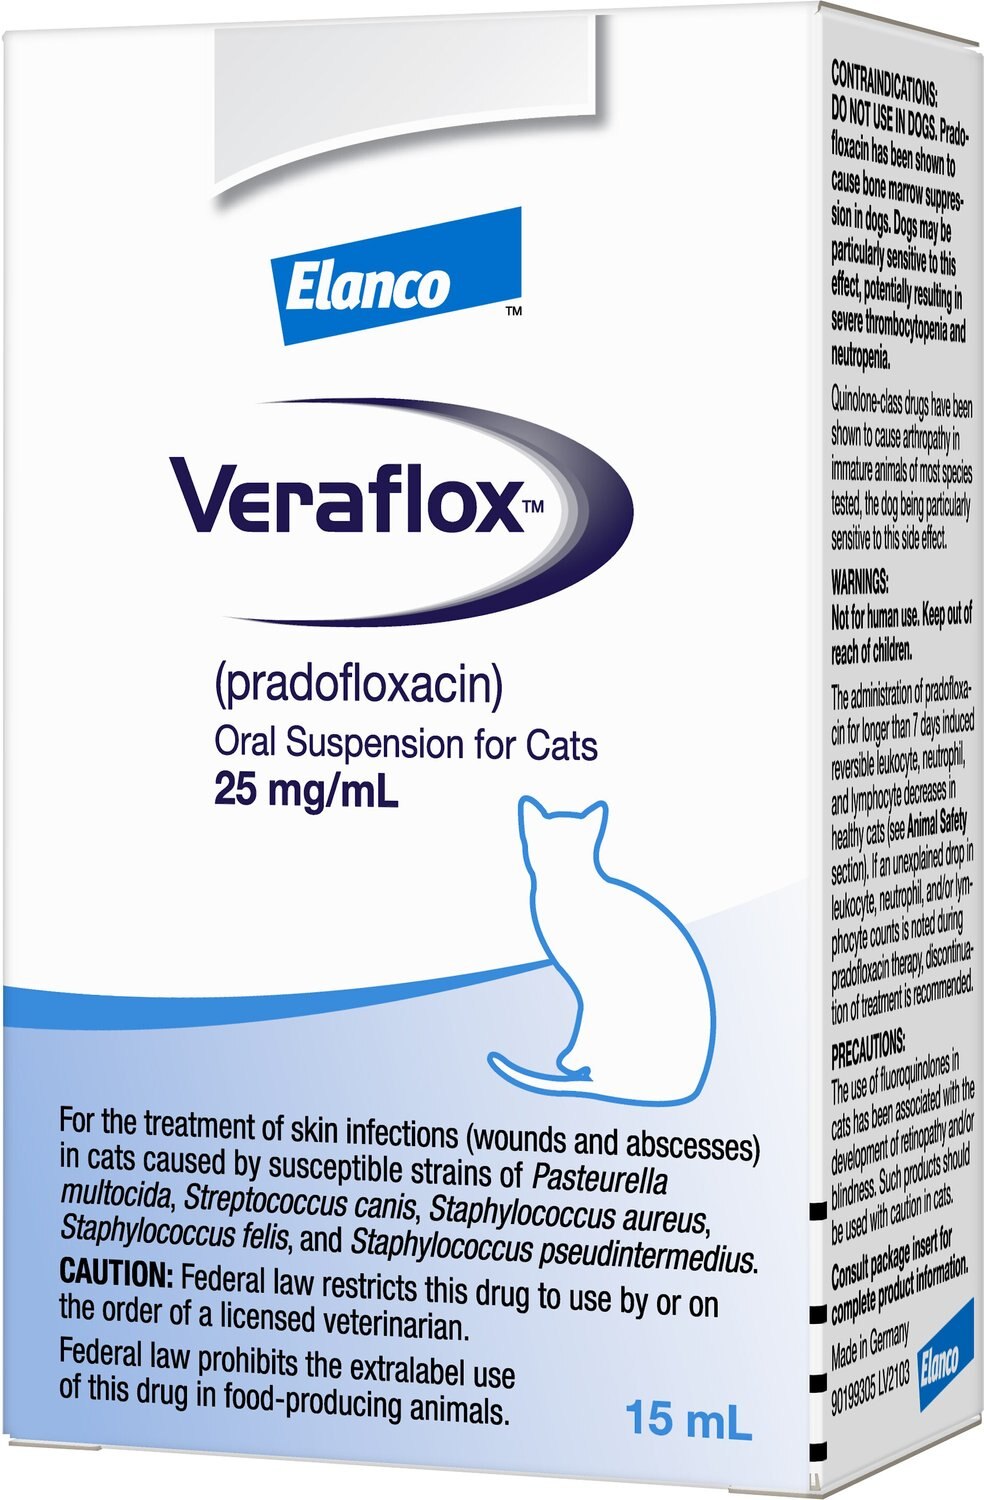 VERAFLOX Oral Suspension for Cats, 25 mg/mL, 15mL